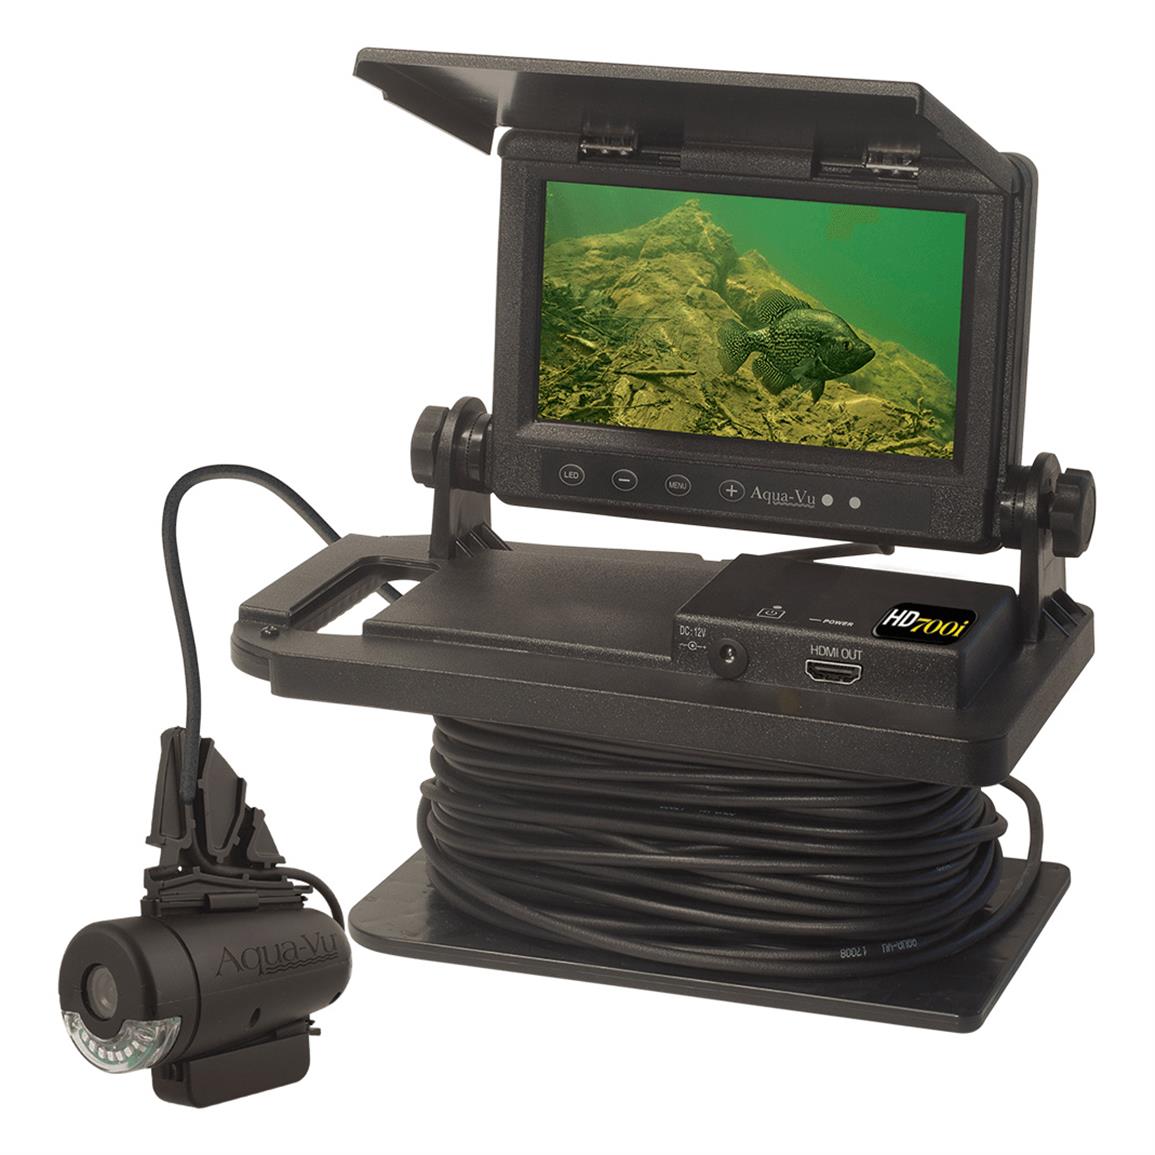 AquaVu HD700i Color Underwater Camera System 670737